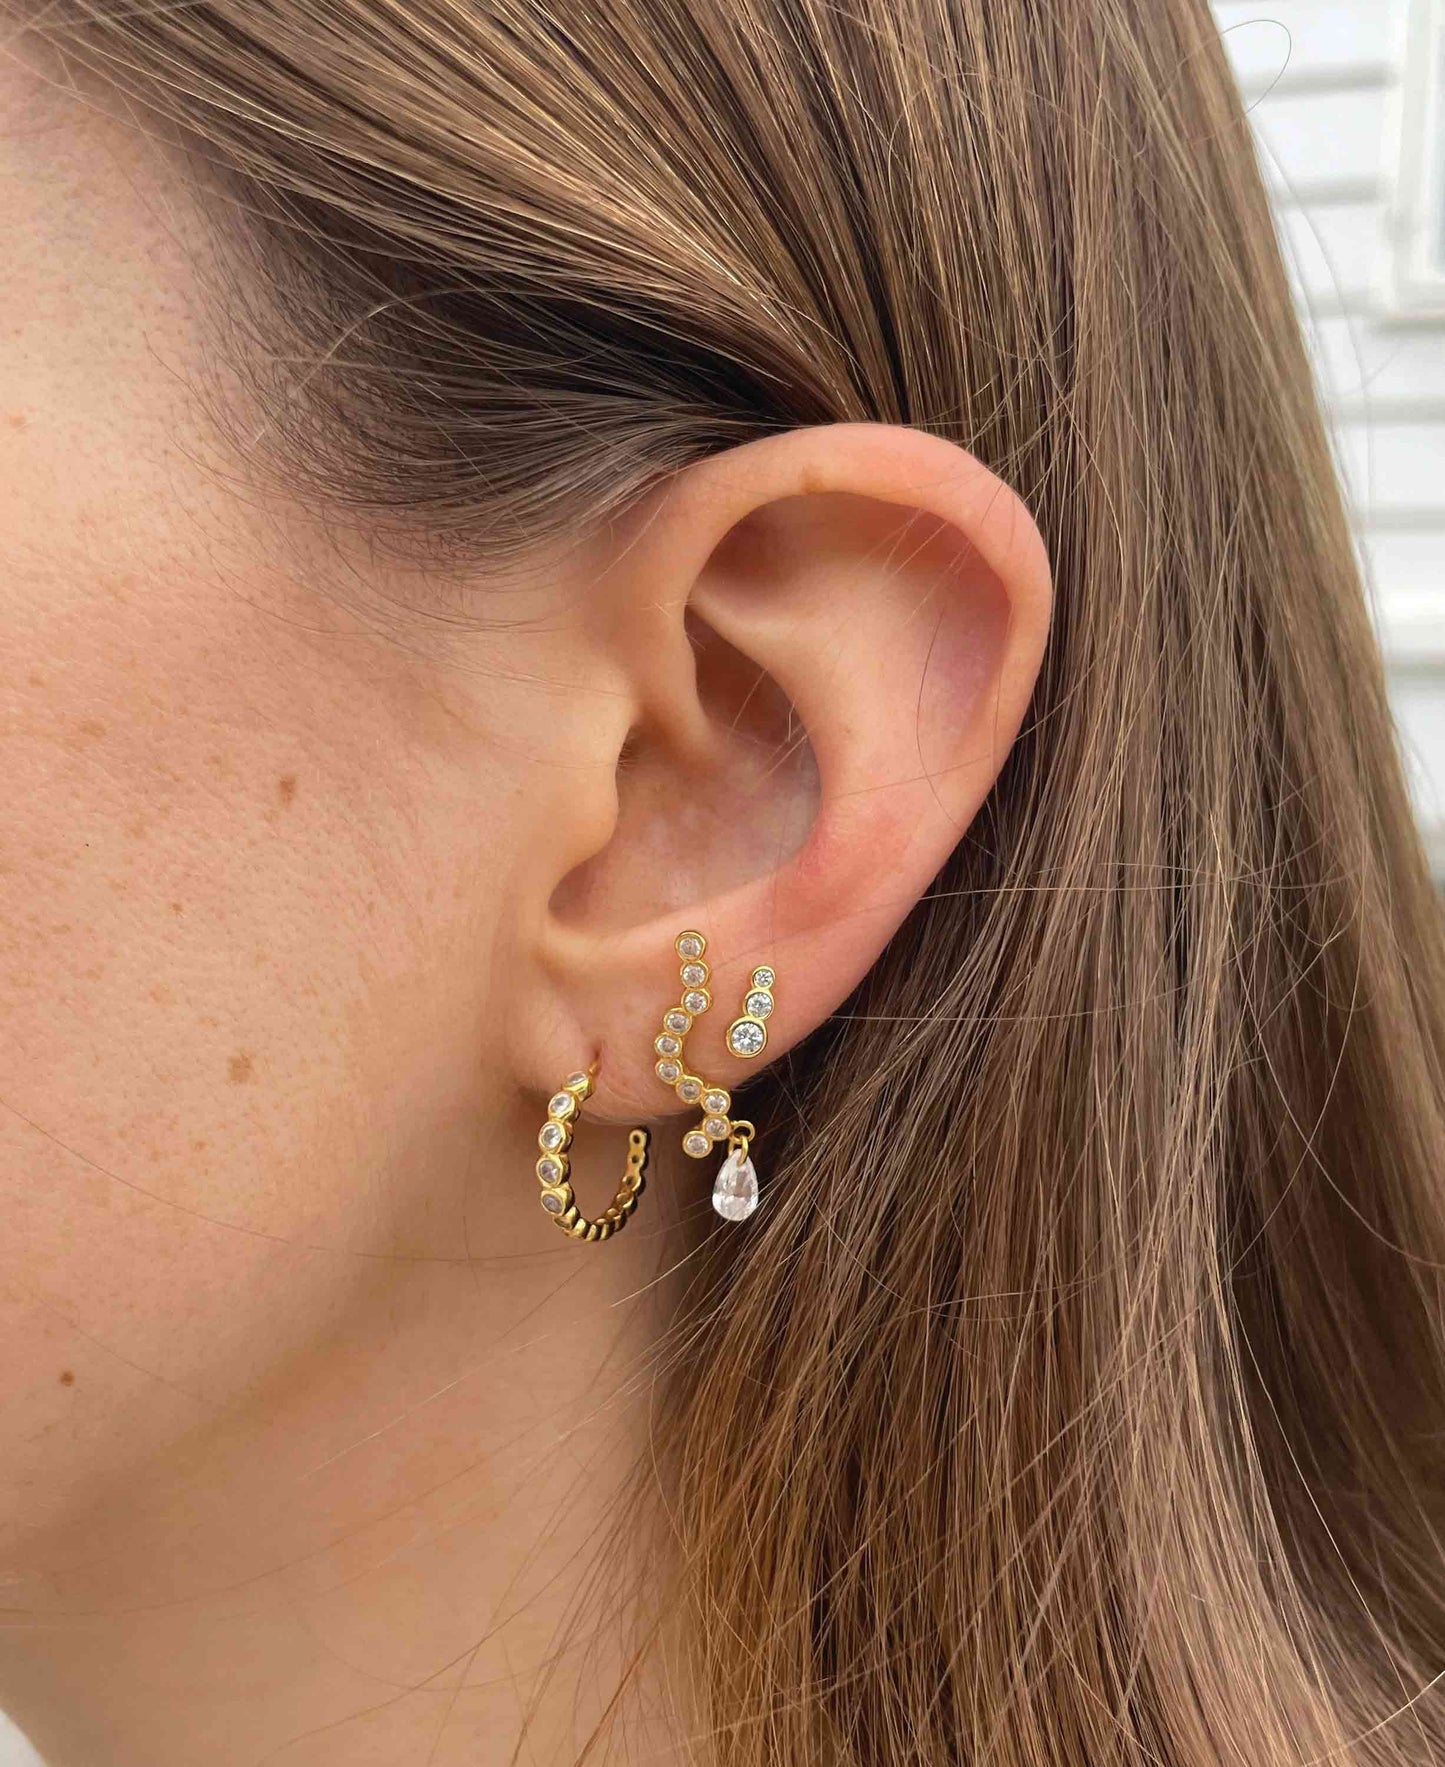 River raindrop earrings